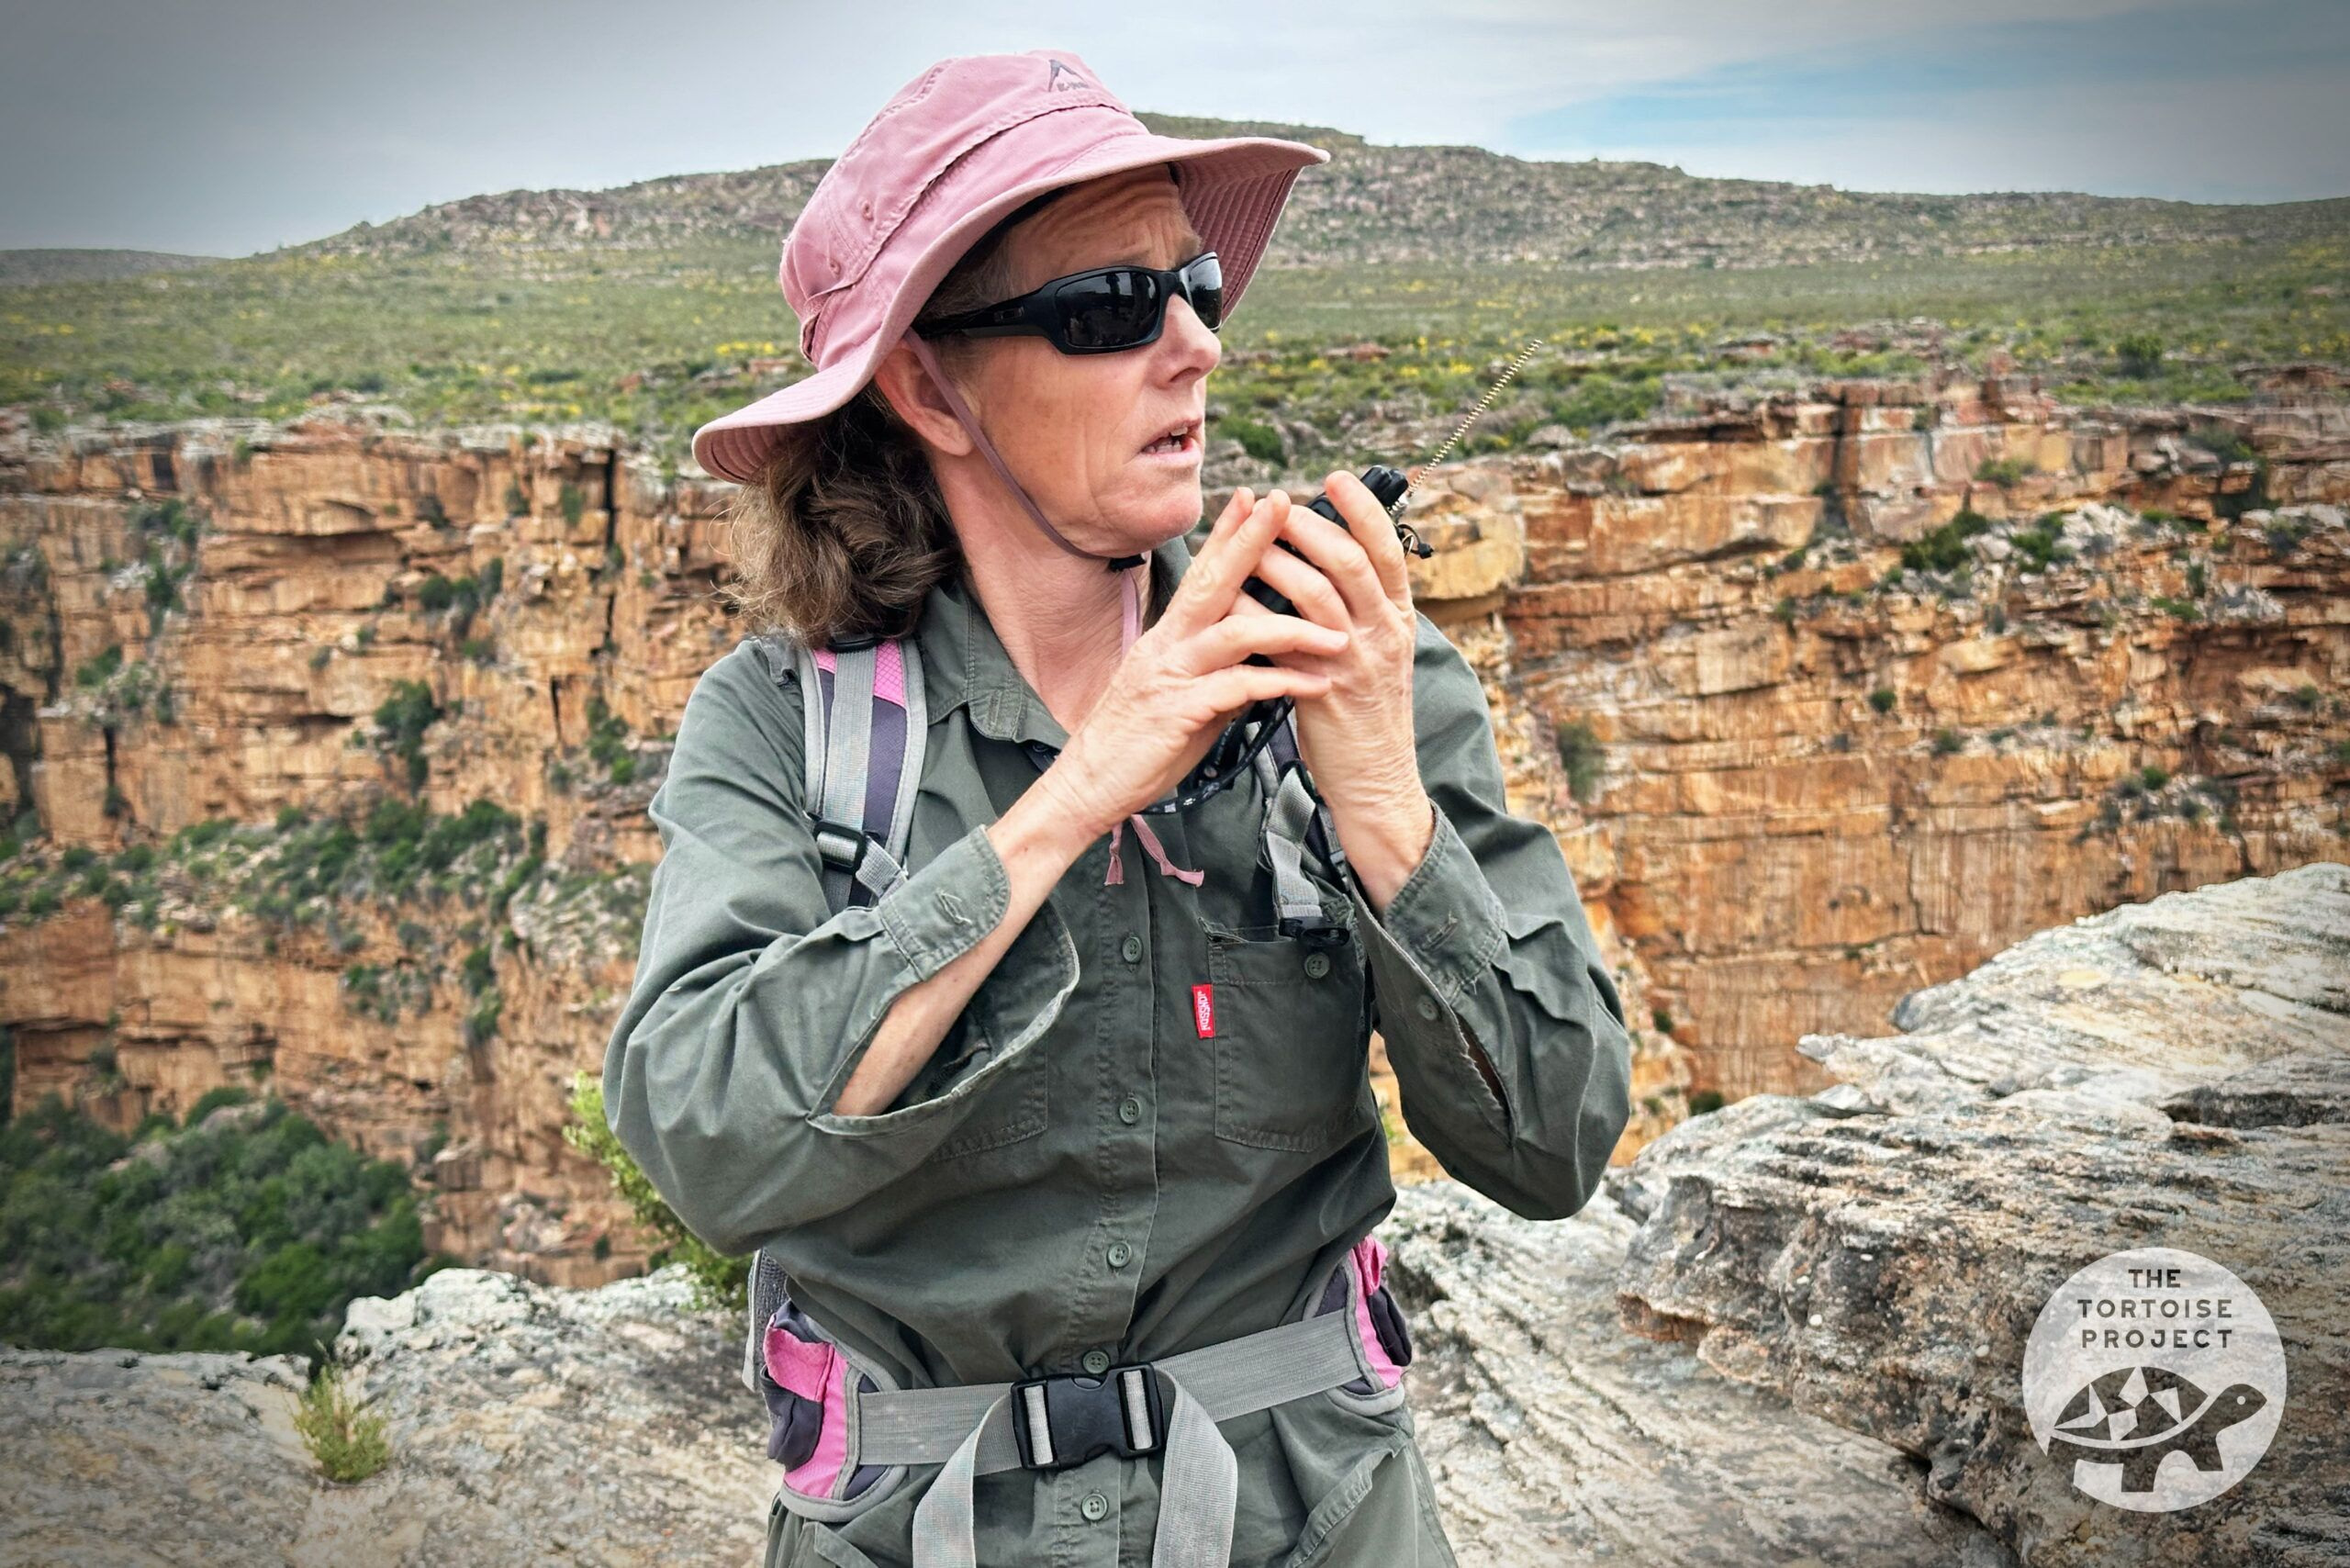 Near Nieuwoudtville, Northern Cape, South Africa — Bonnie Schumann at the walkie-talkie.